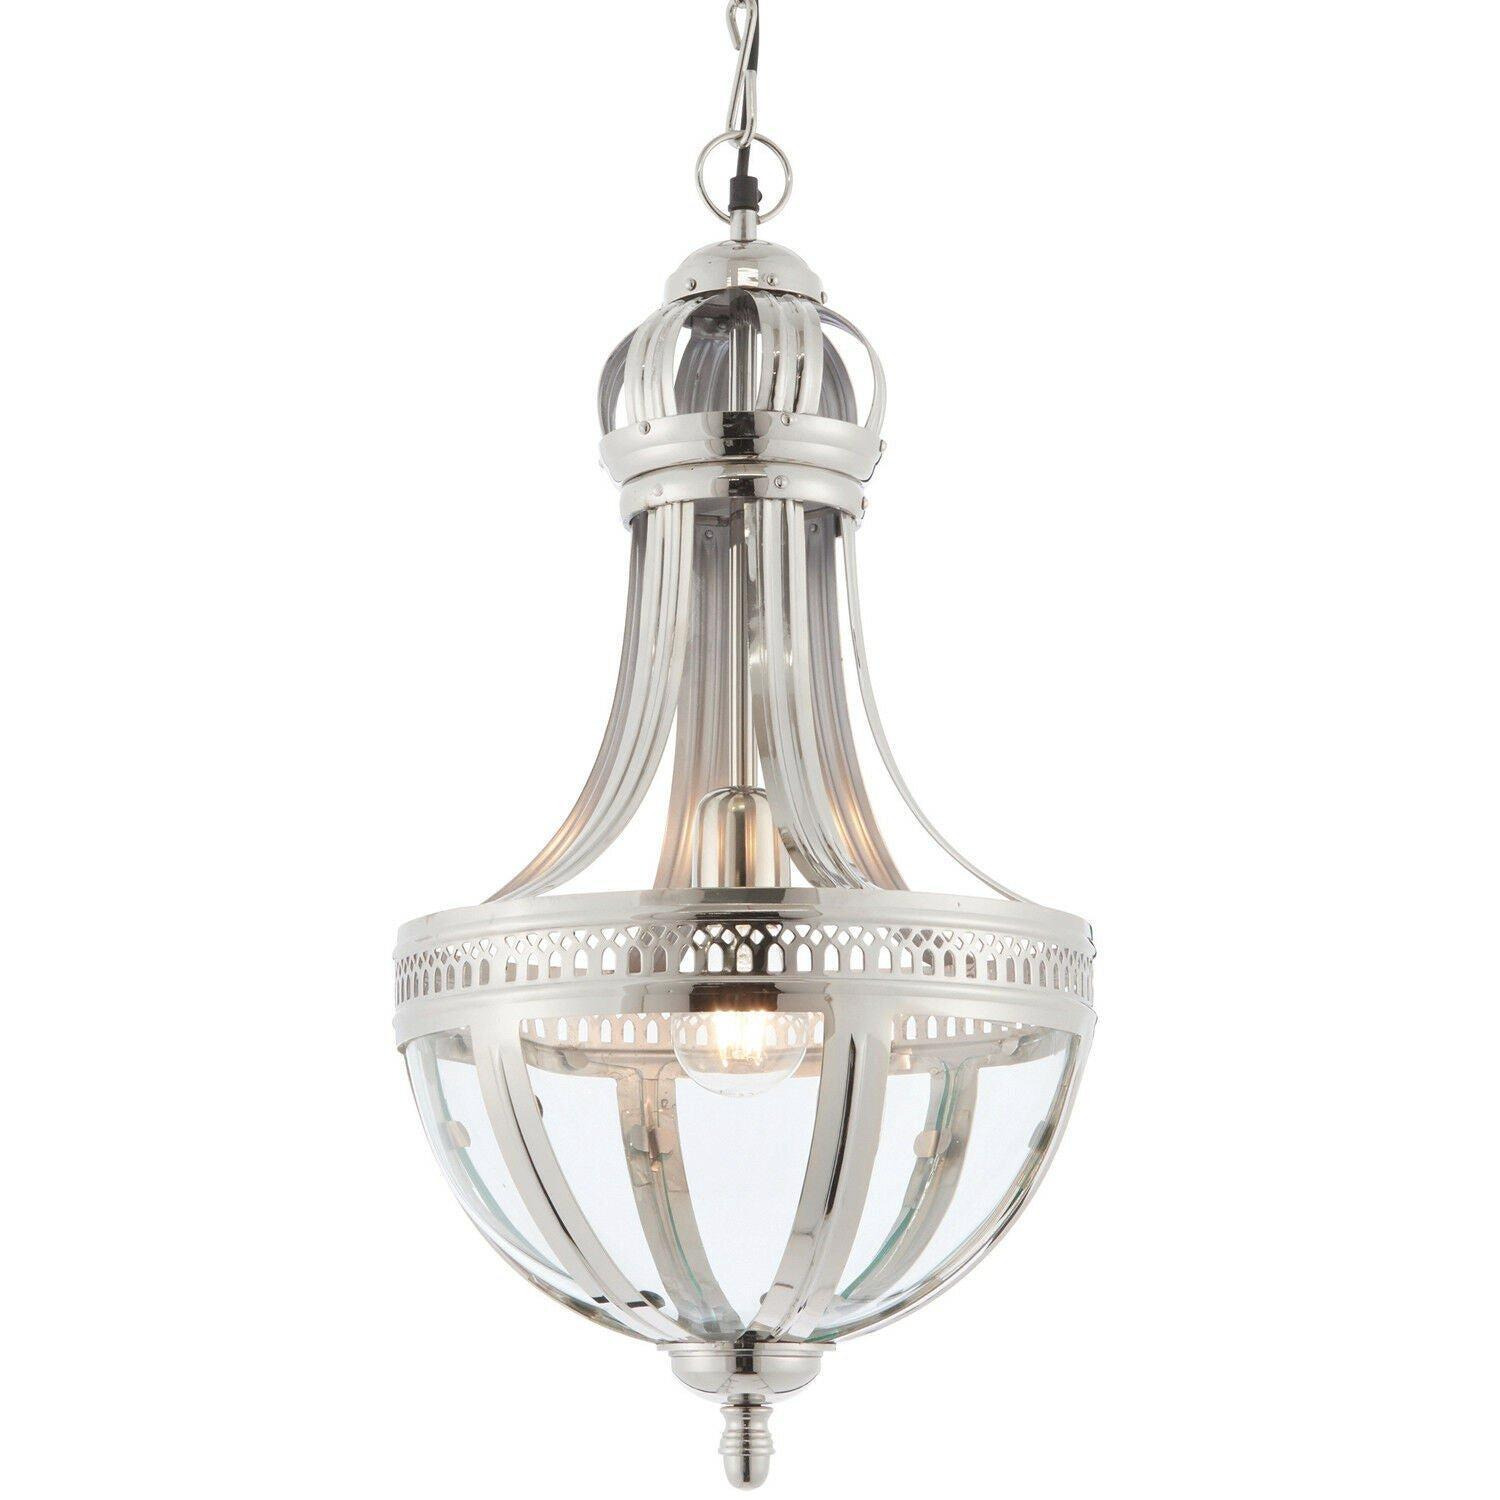 Hanging Ceiling Pendant Light Nickel & Clear Glass Vintage Lamp Bulb Lantern - image 1